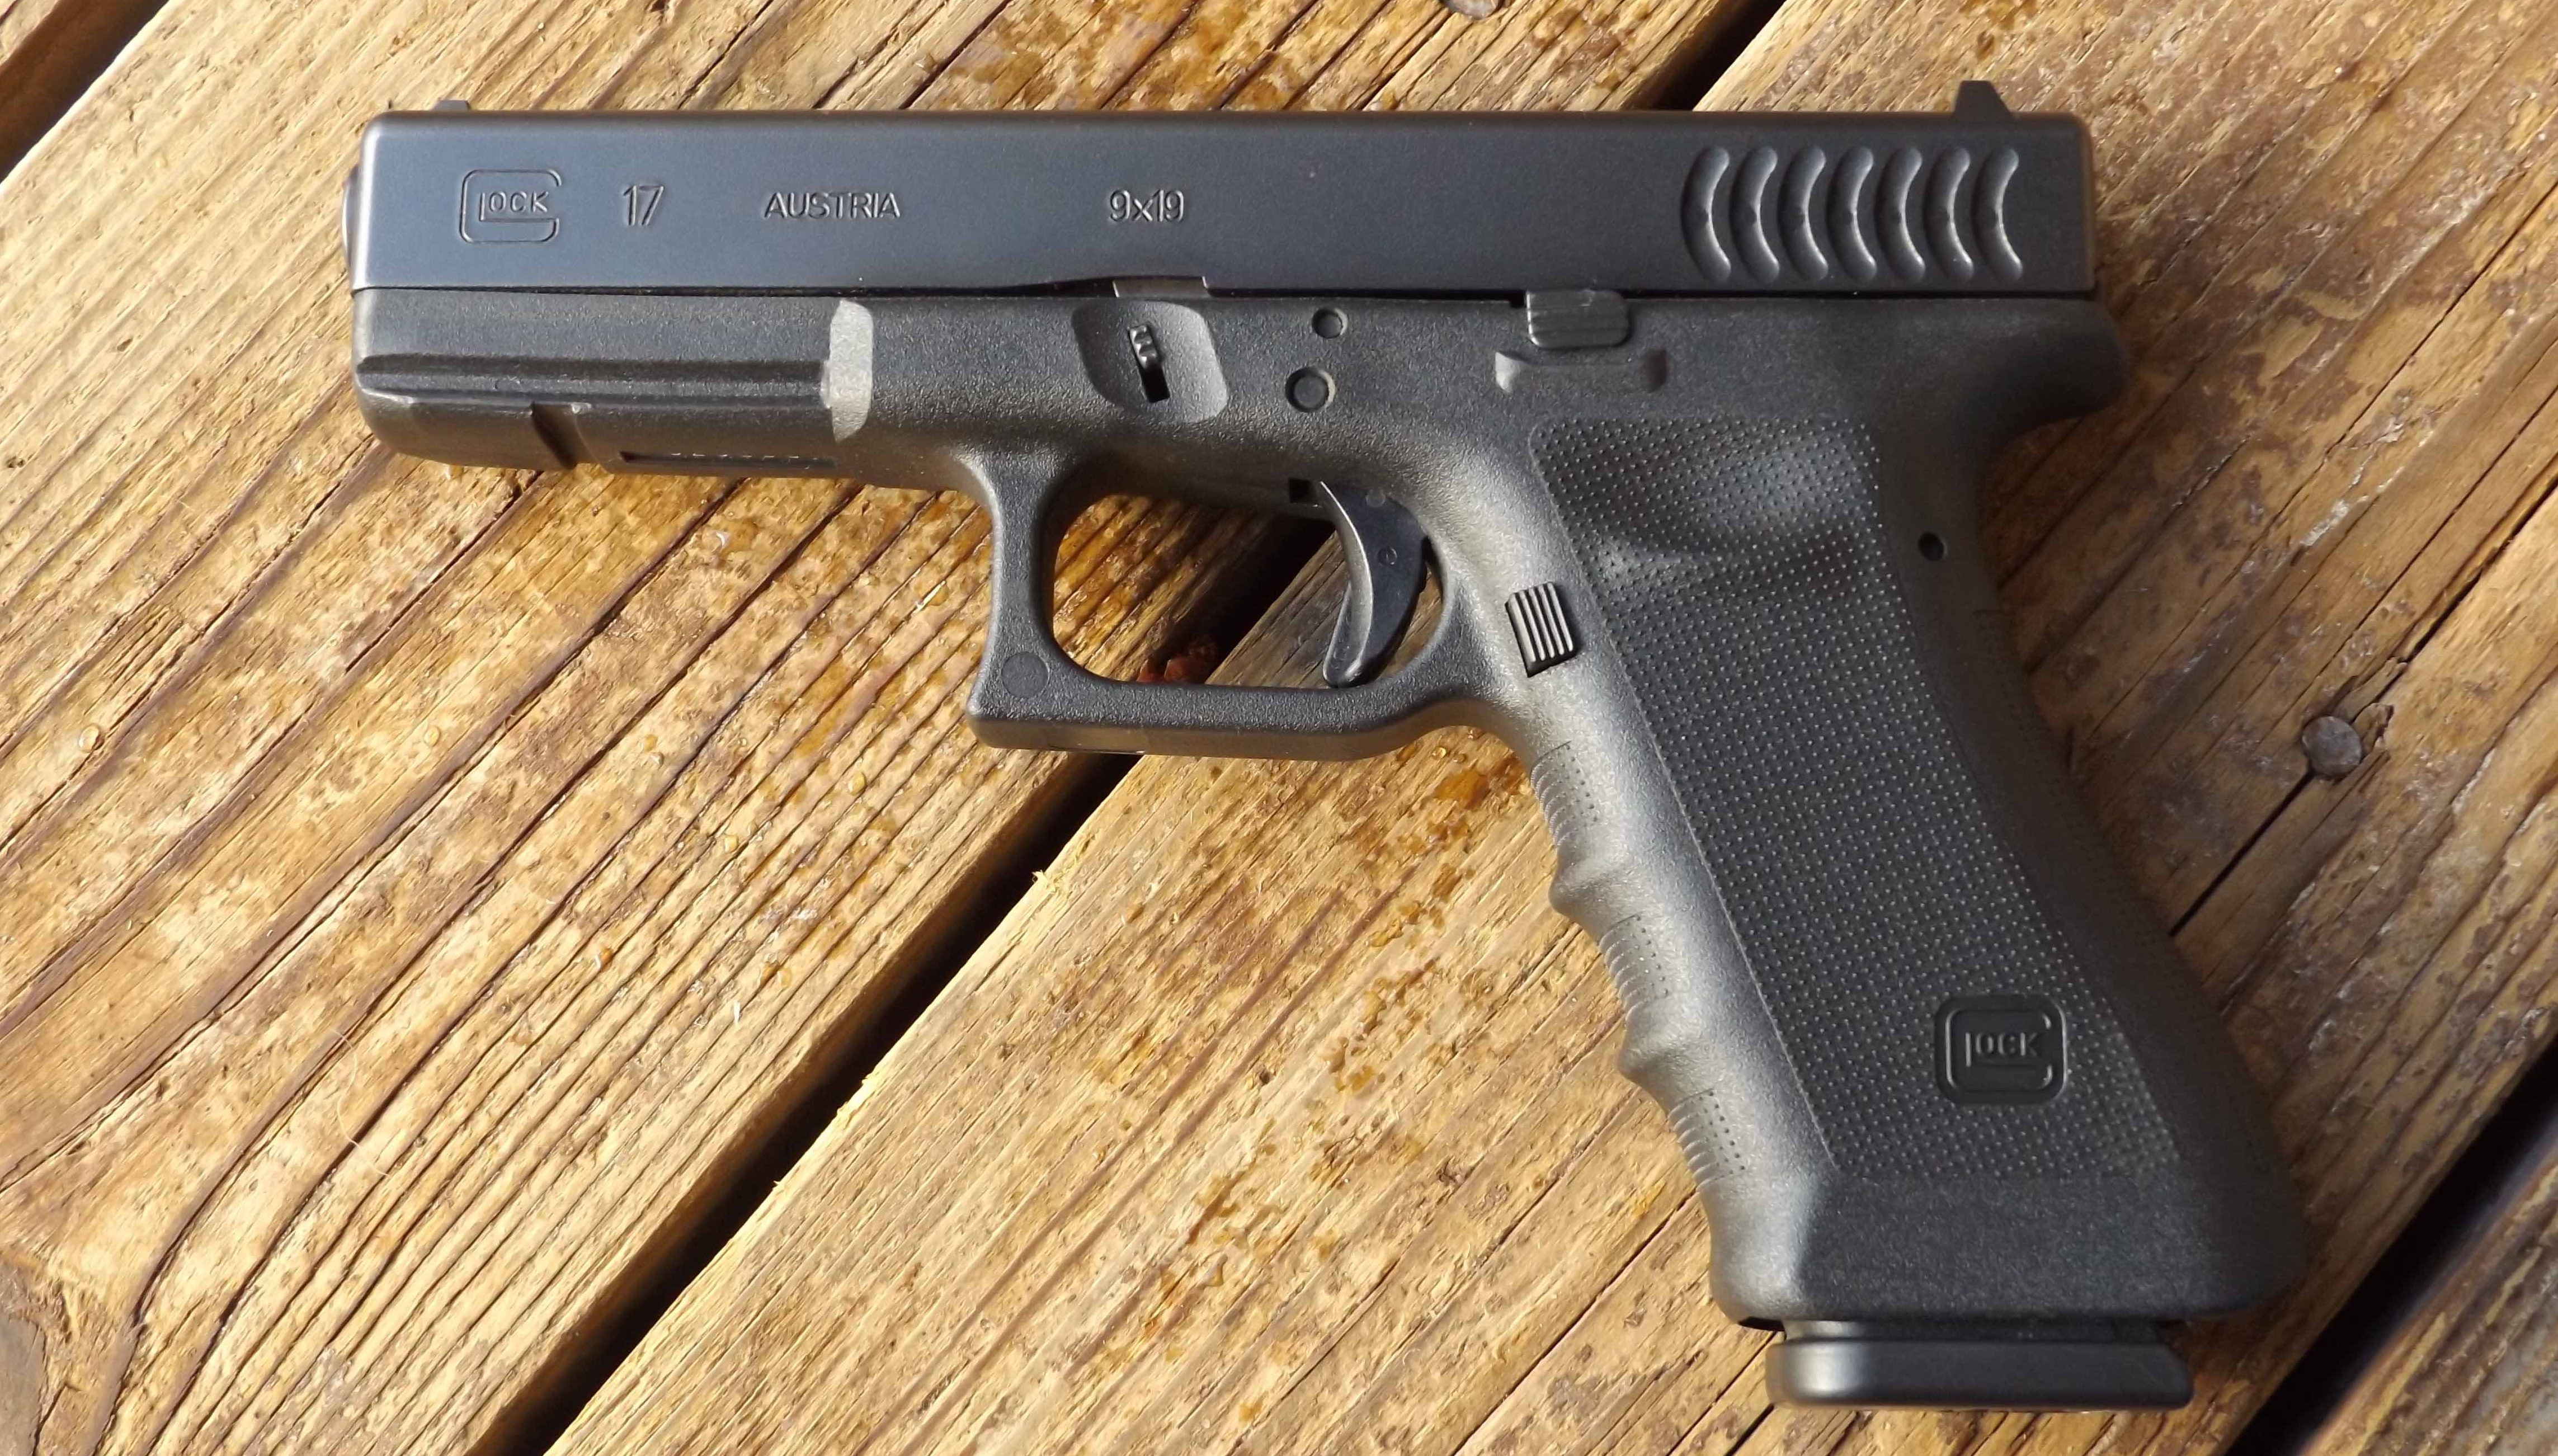 Glock 17 RTF 9mm Handgun product review with range test, by Pat Cascio.